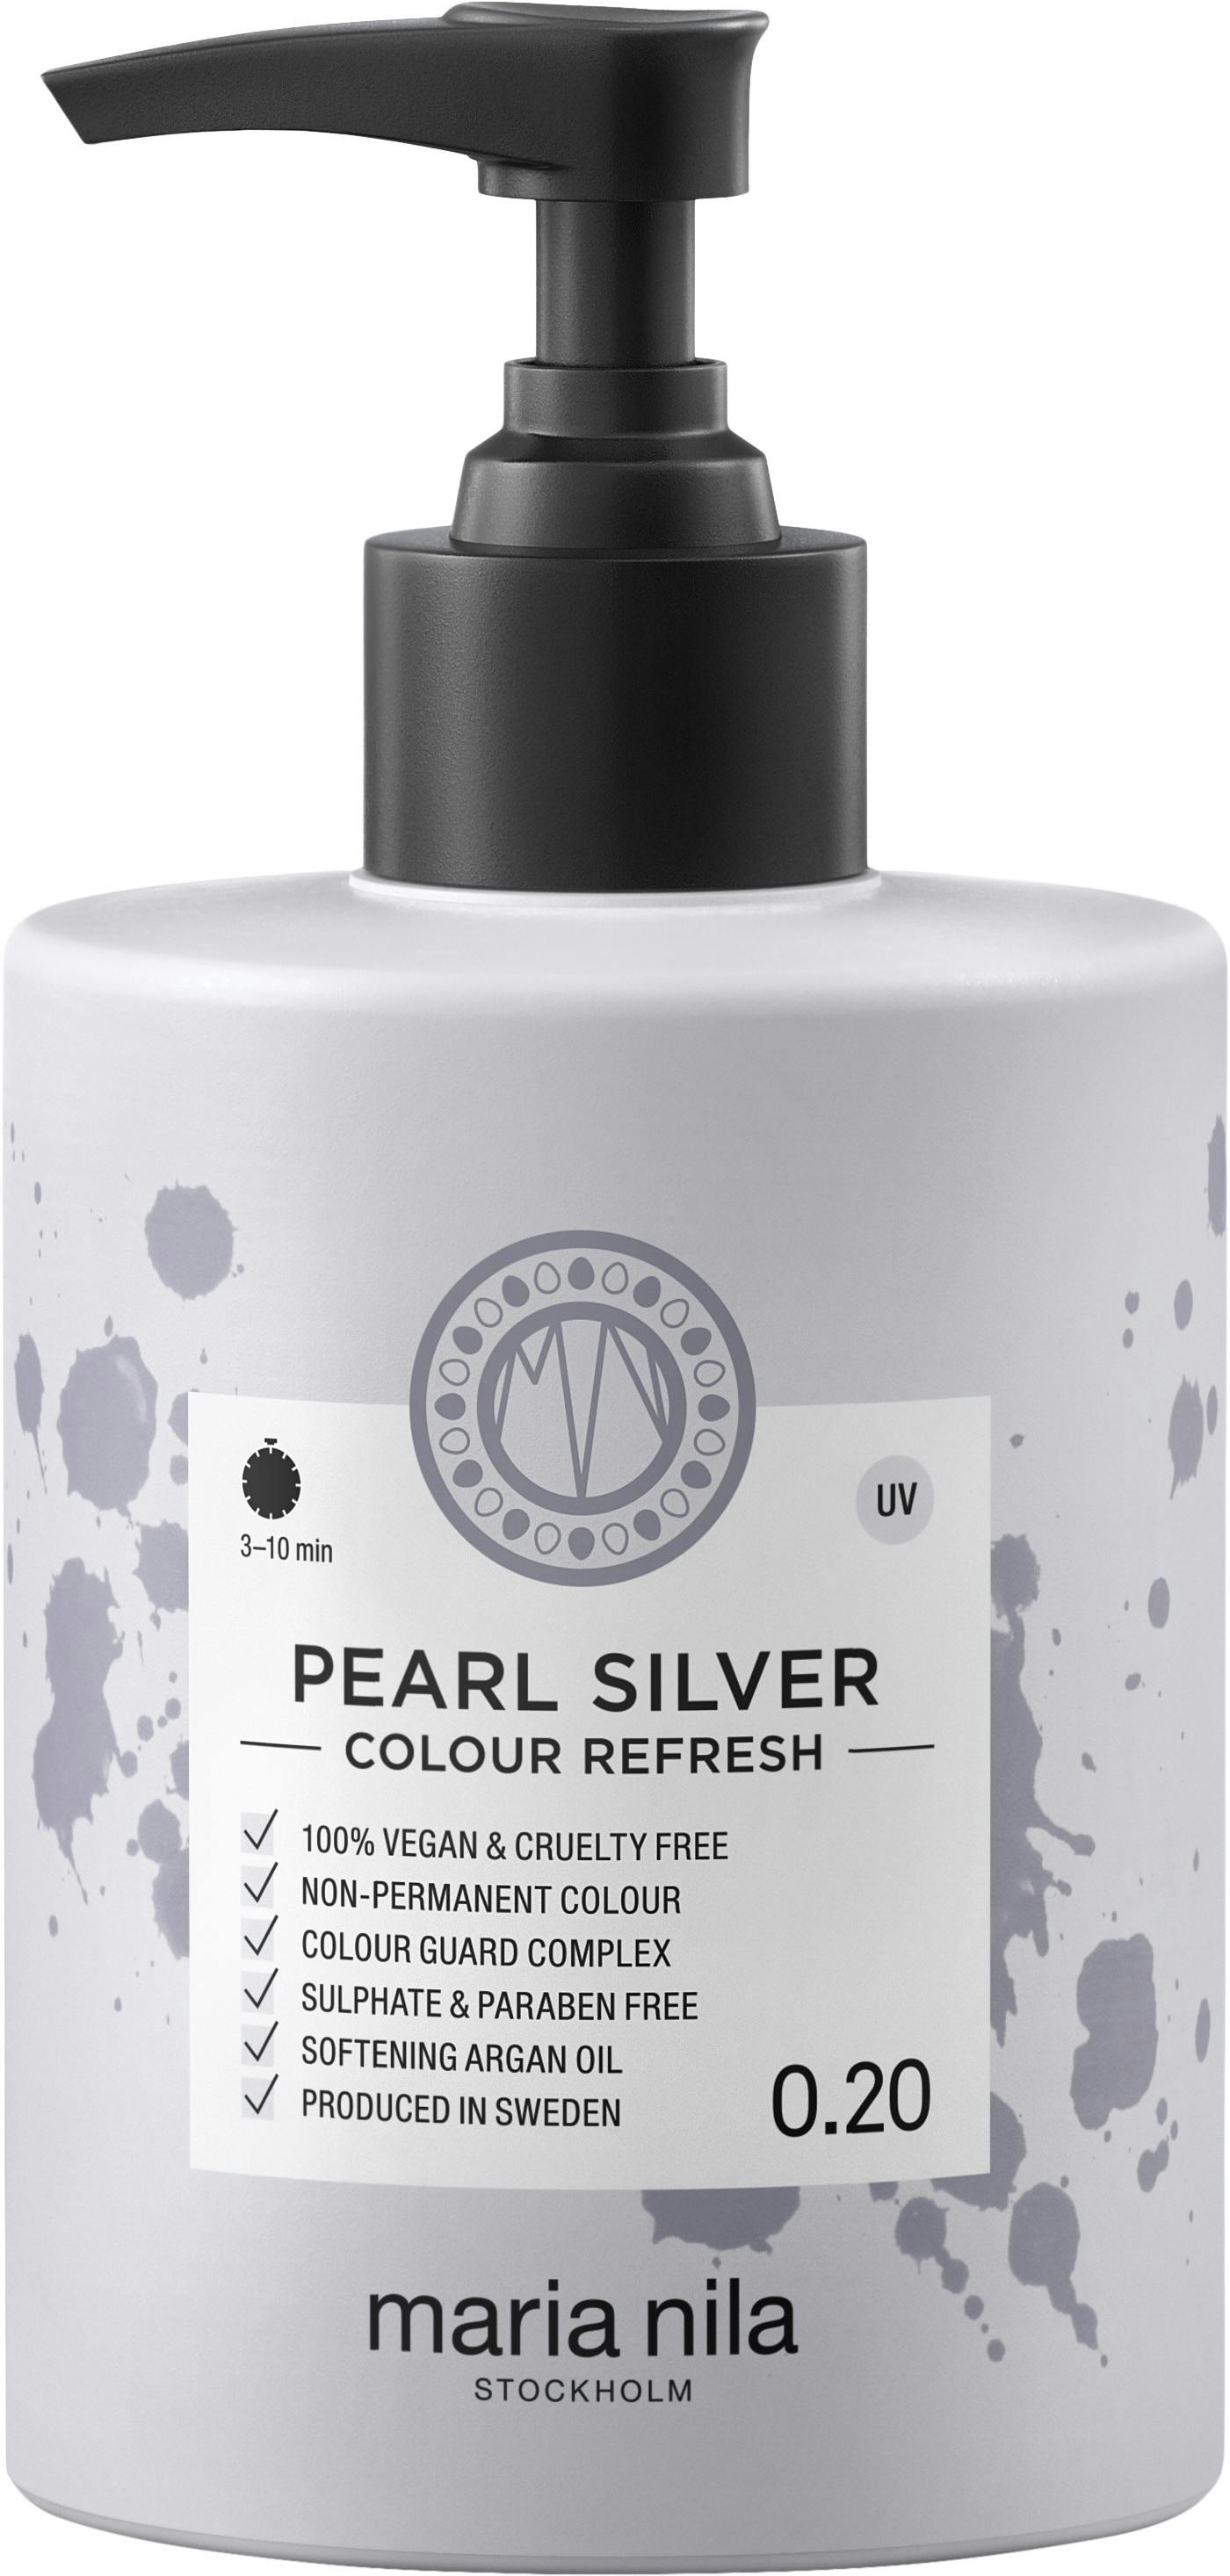 Maria Nila Colour Refresh 0.20 Pearl Silver 300 ml